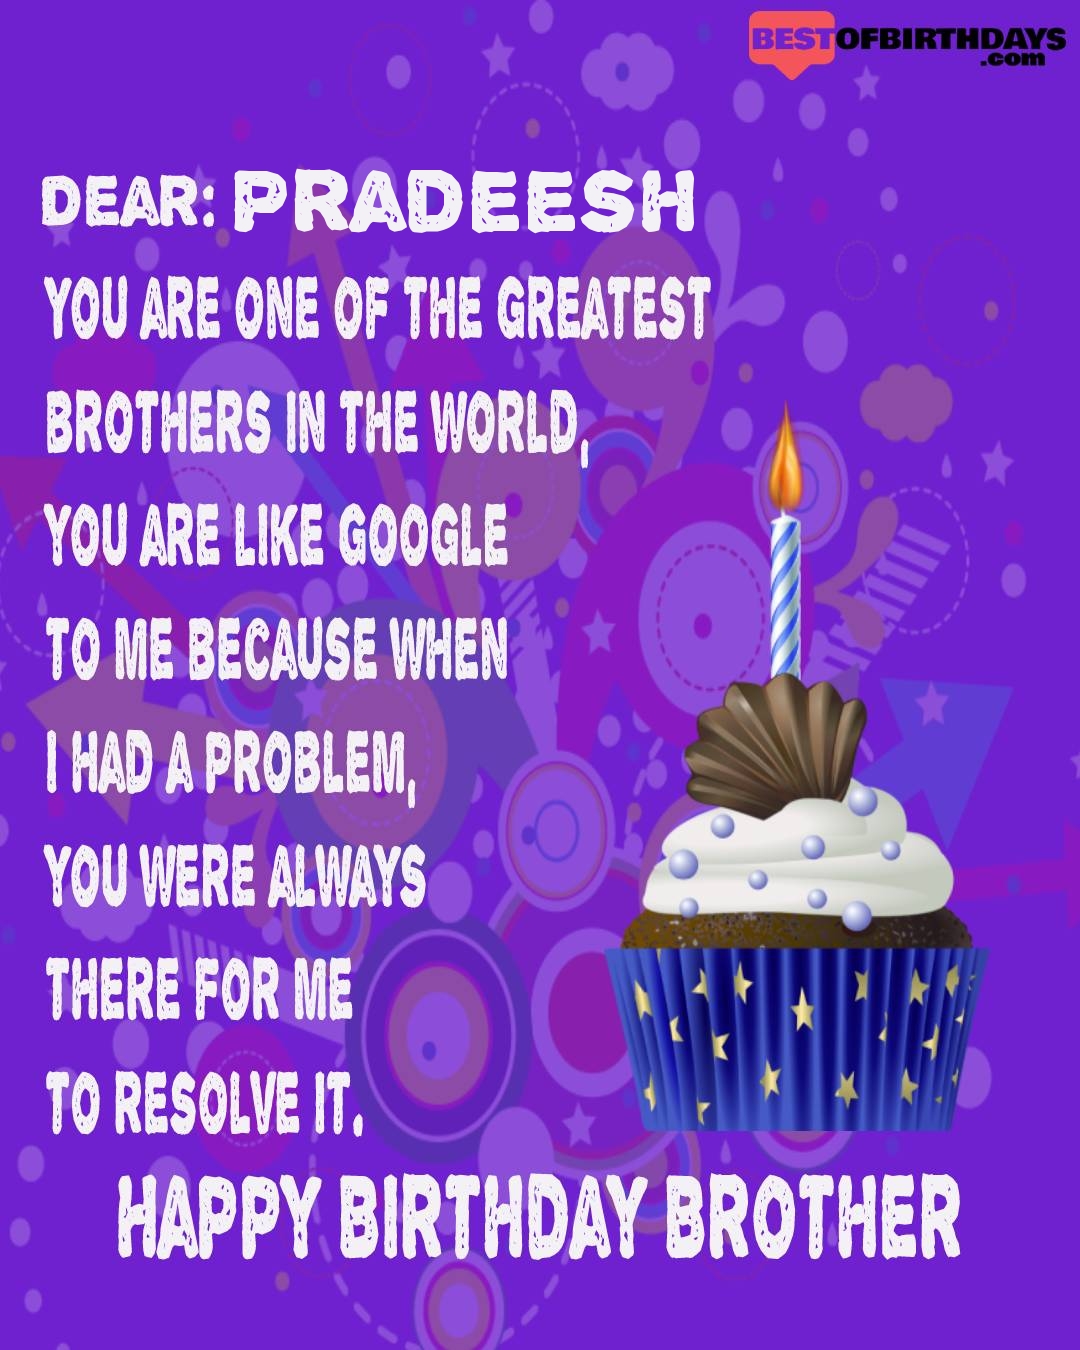 Happy birthday pradeesh bhai brother bro